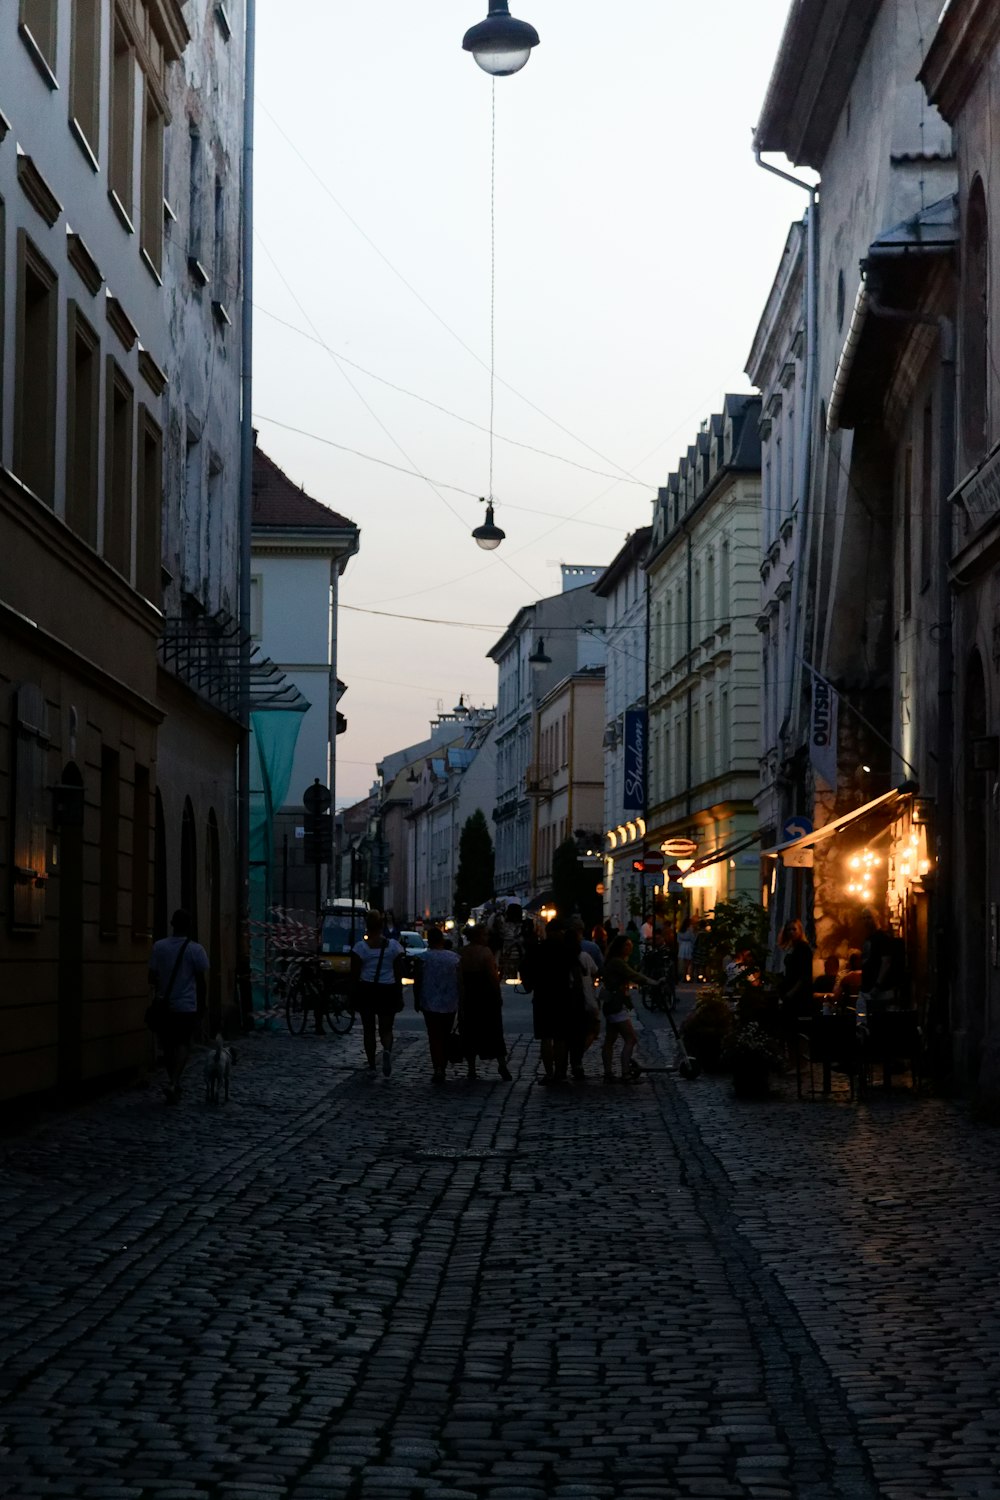 a cobblestone street with people walking down it